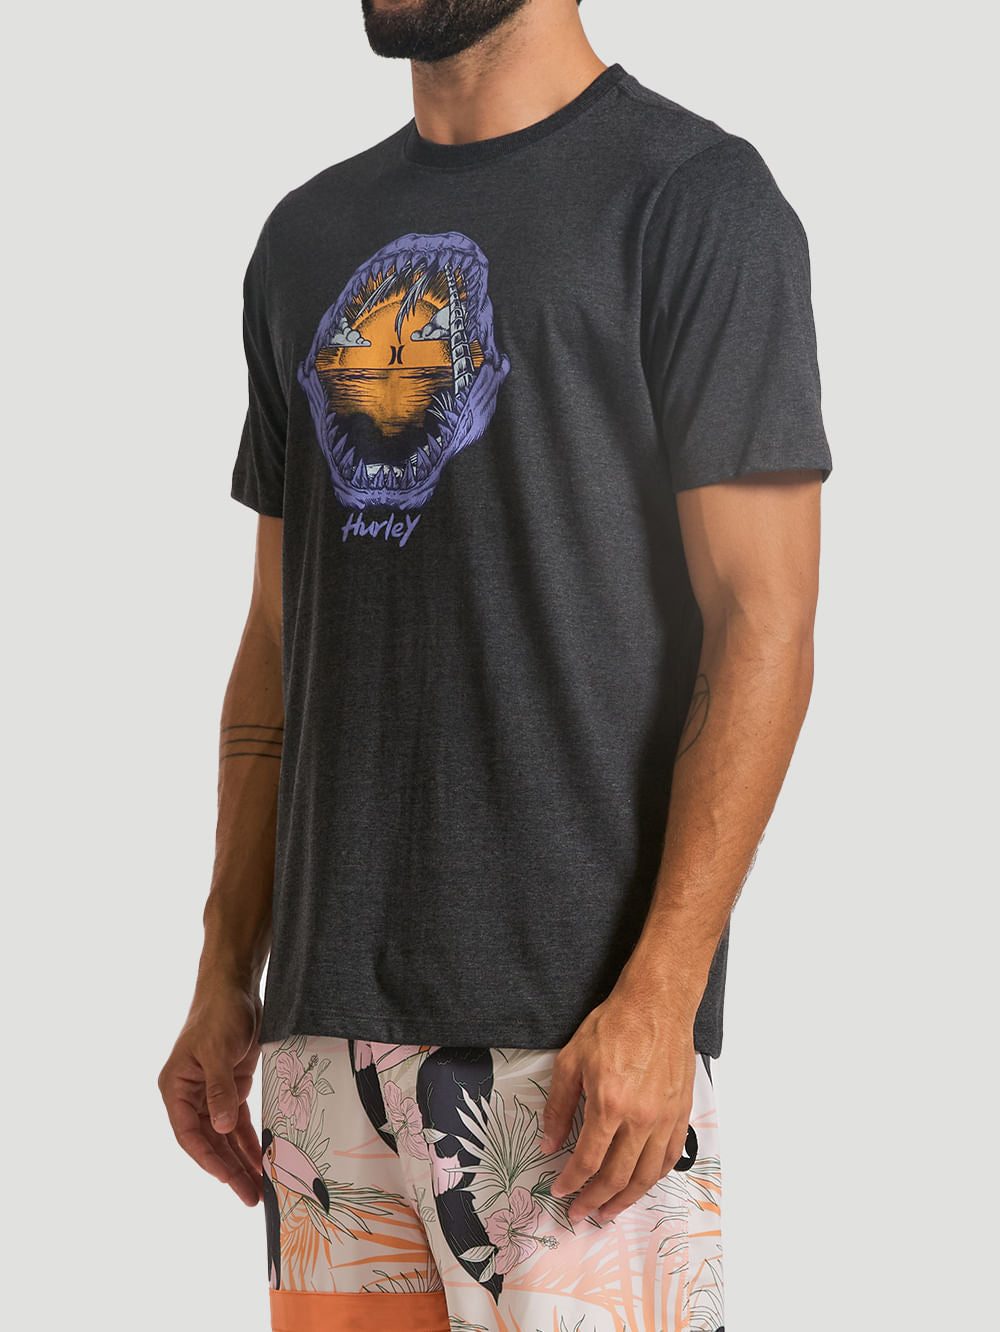 Camiseta Hurley Shark Mescla Preto